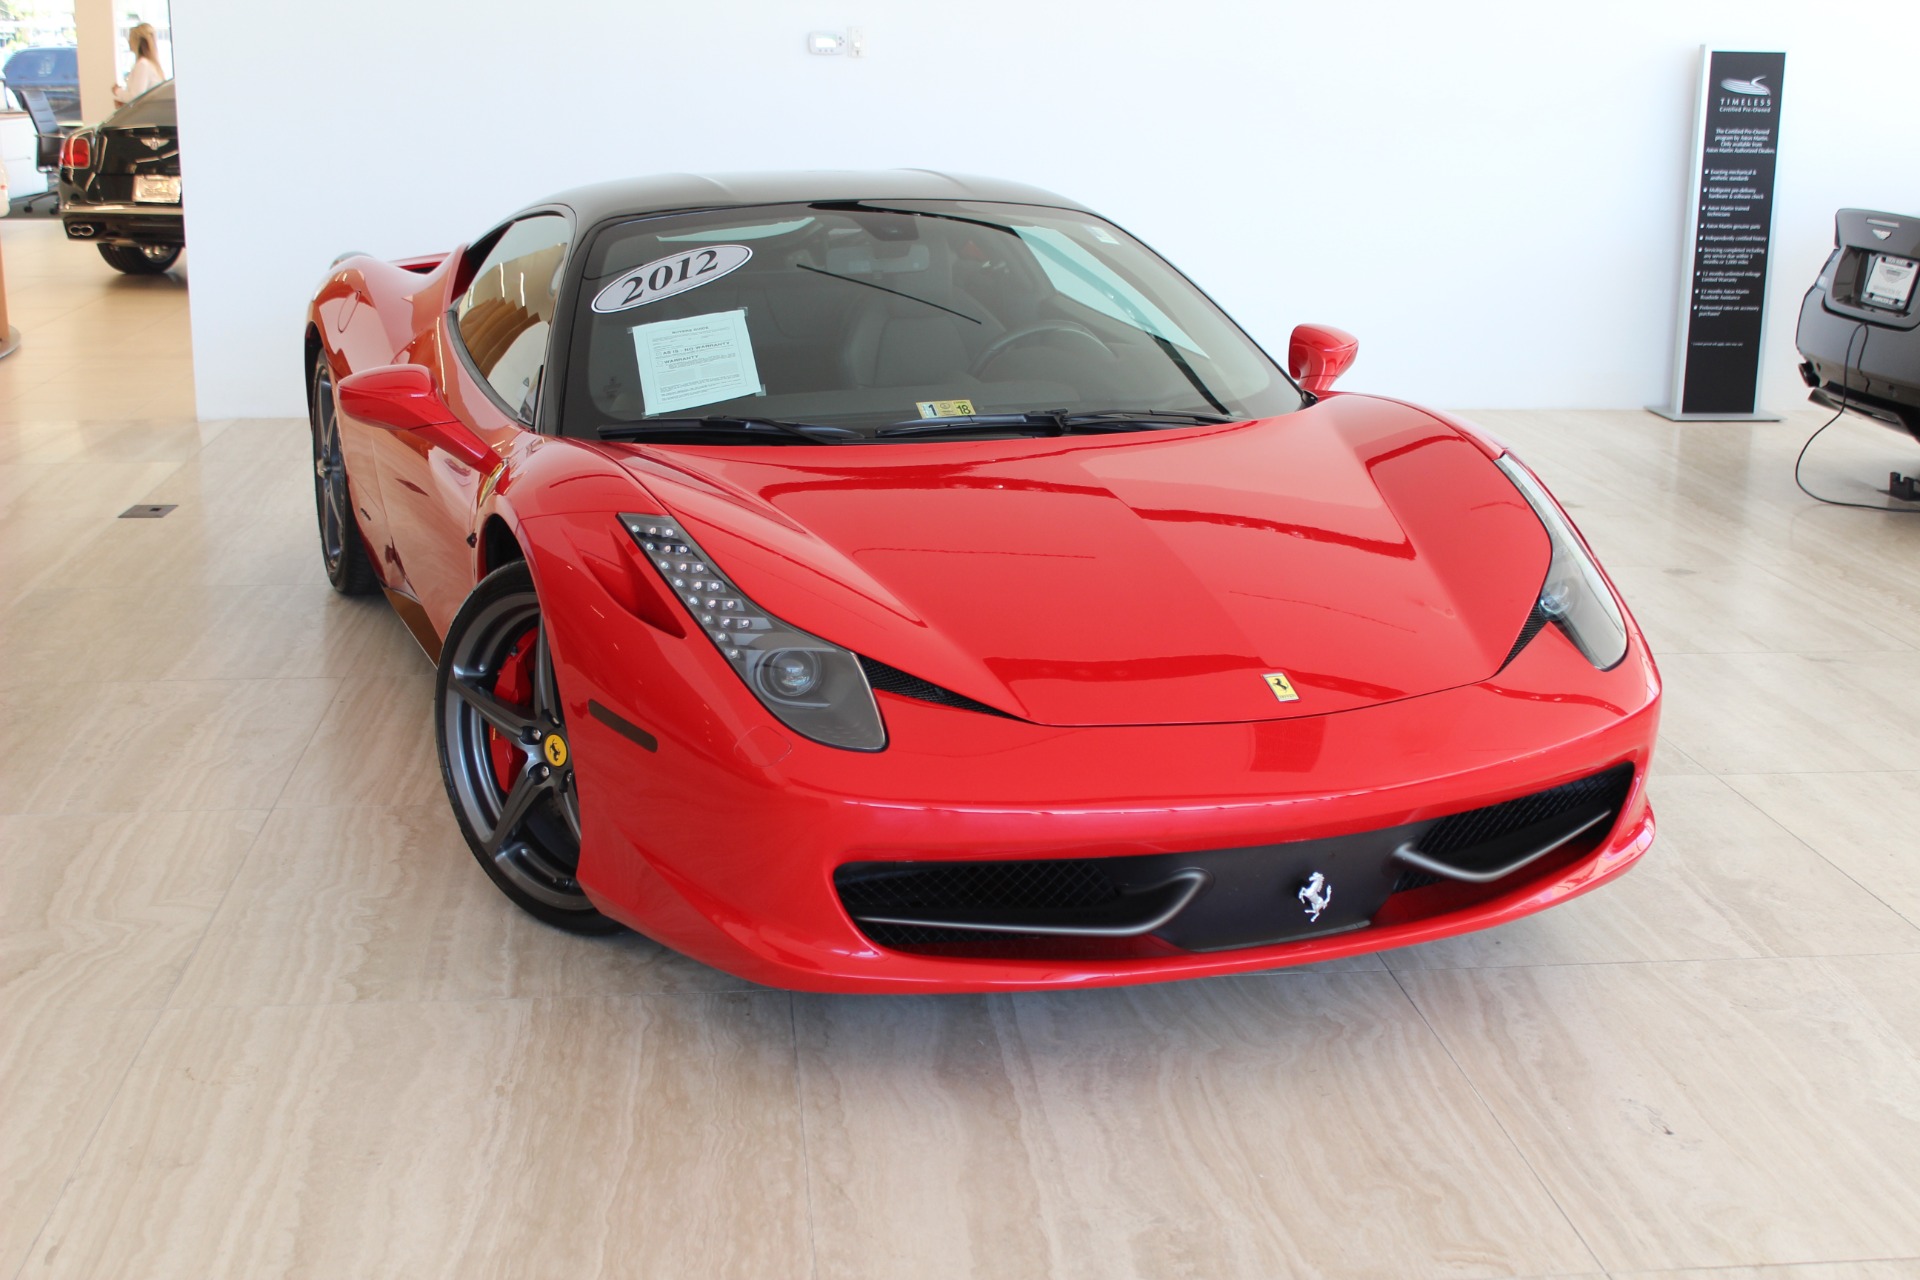 2012 Ferrari 458 Italia Stock 7nl01699a For Sale Near